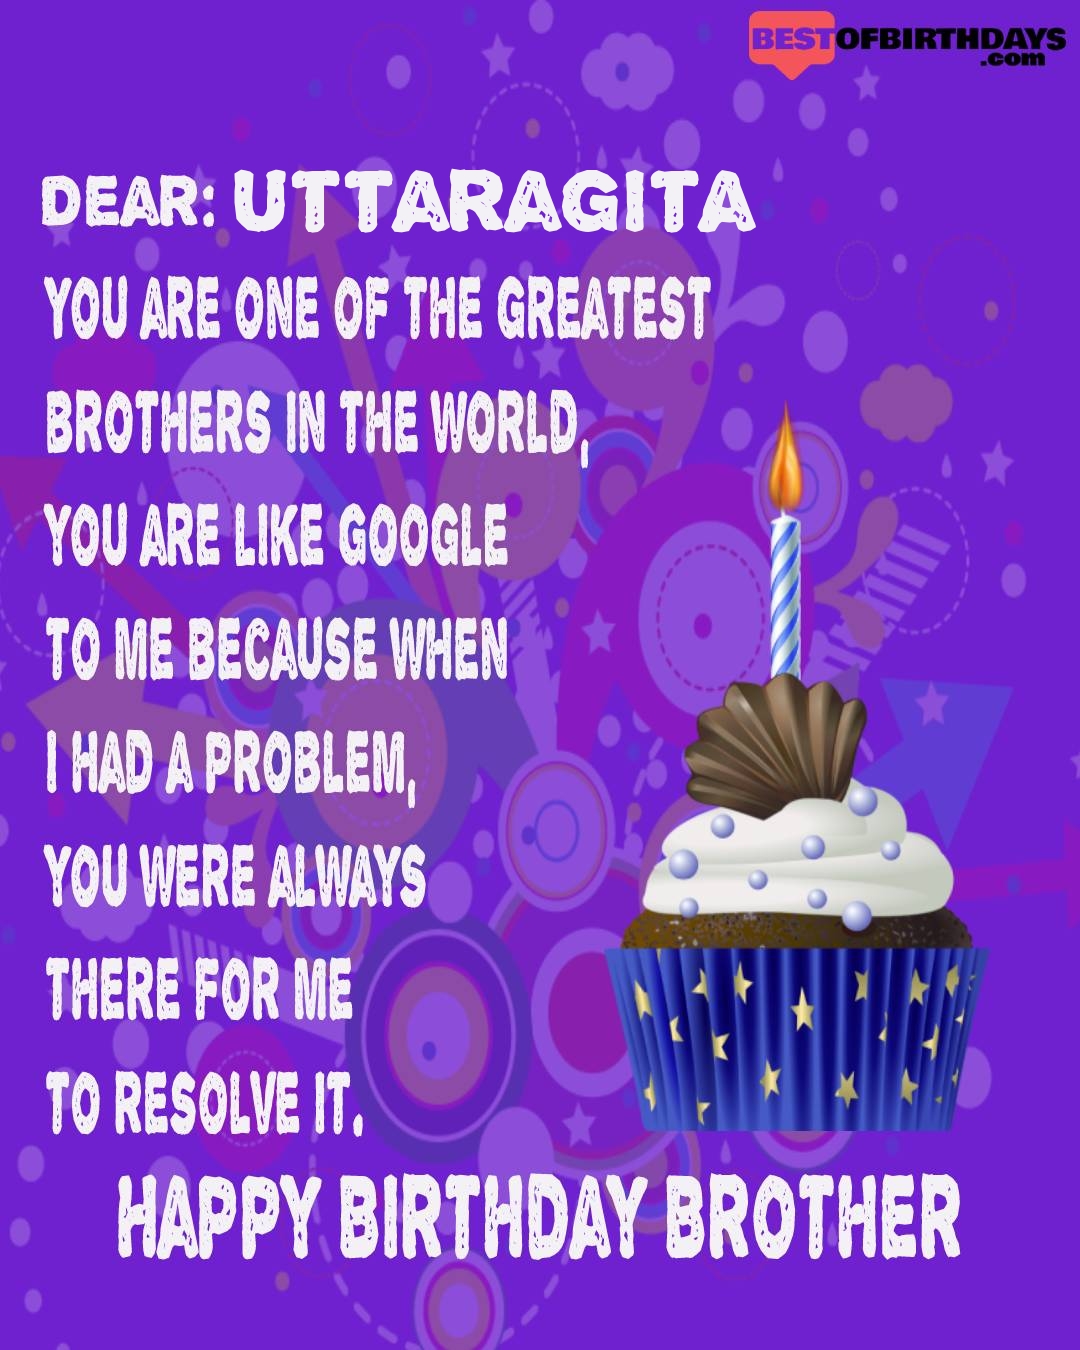 Happy birthday uttaragita bhai brother bro